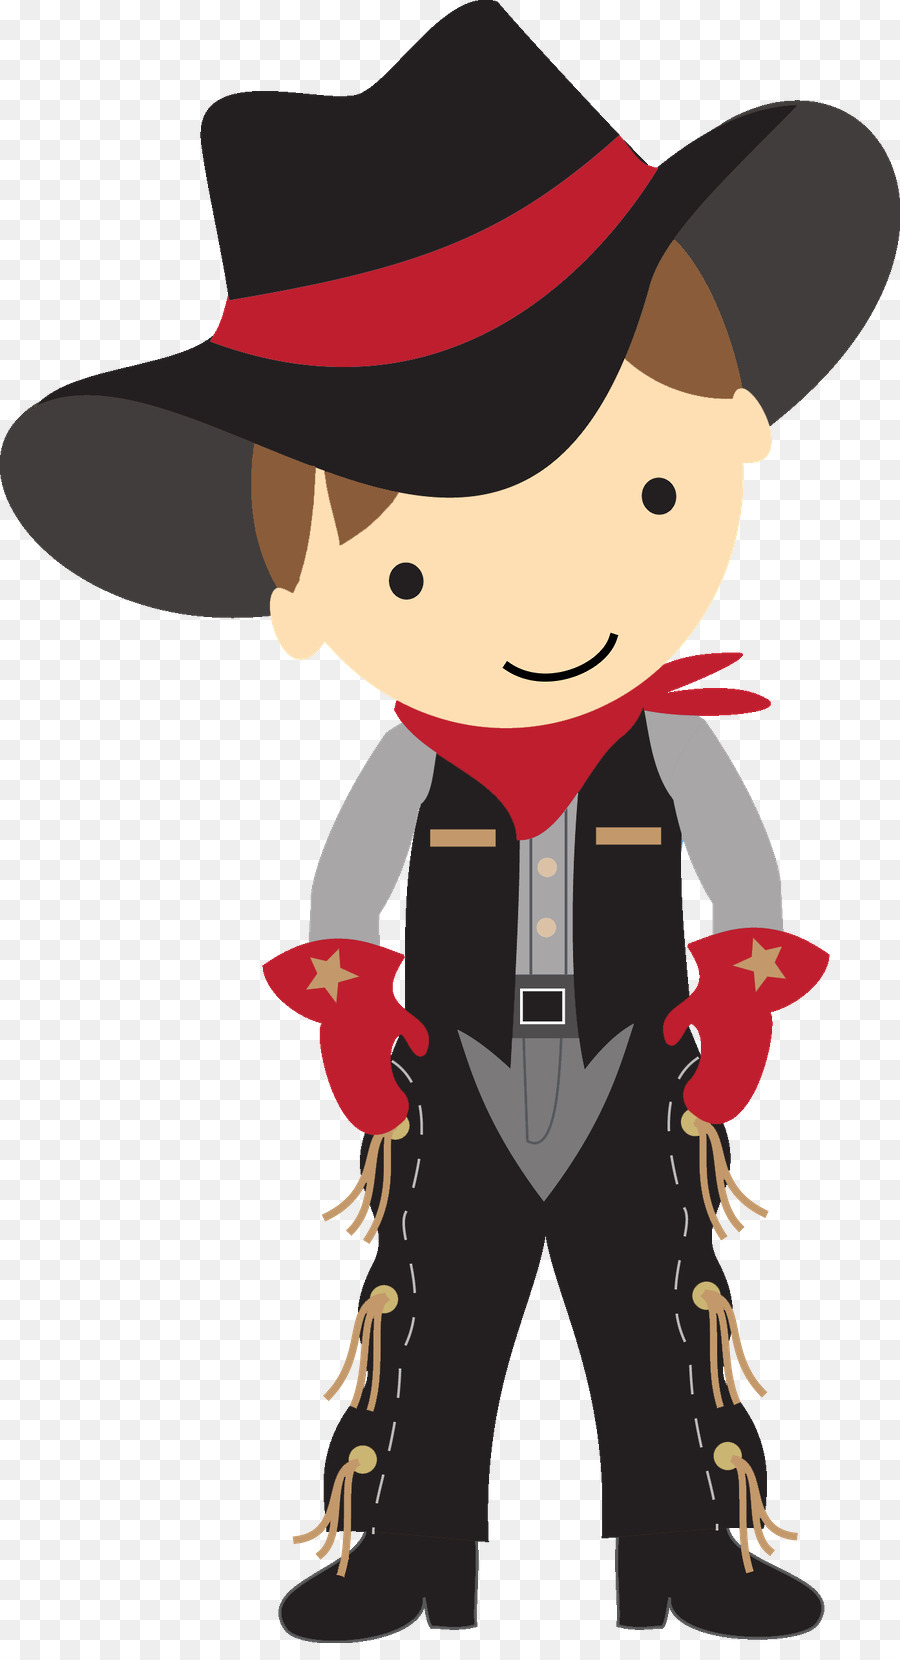 Cowboy Western Clip art - cowboy png download - 900*1643 - Free Transparent Cowboy png Download.